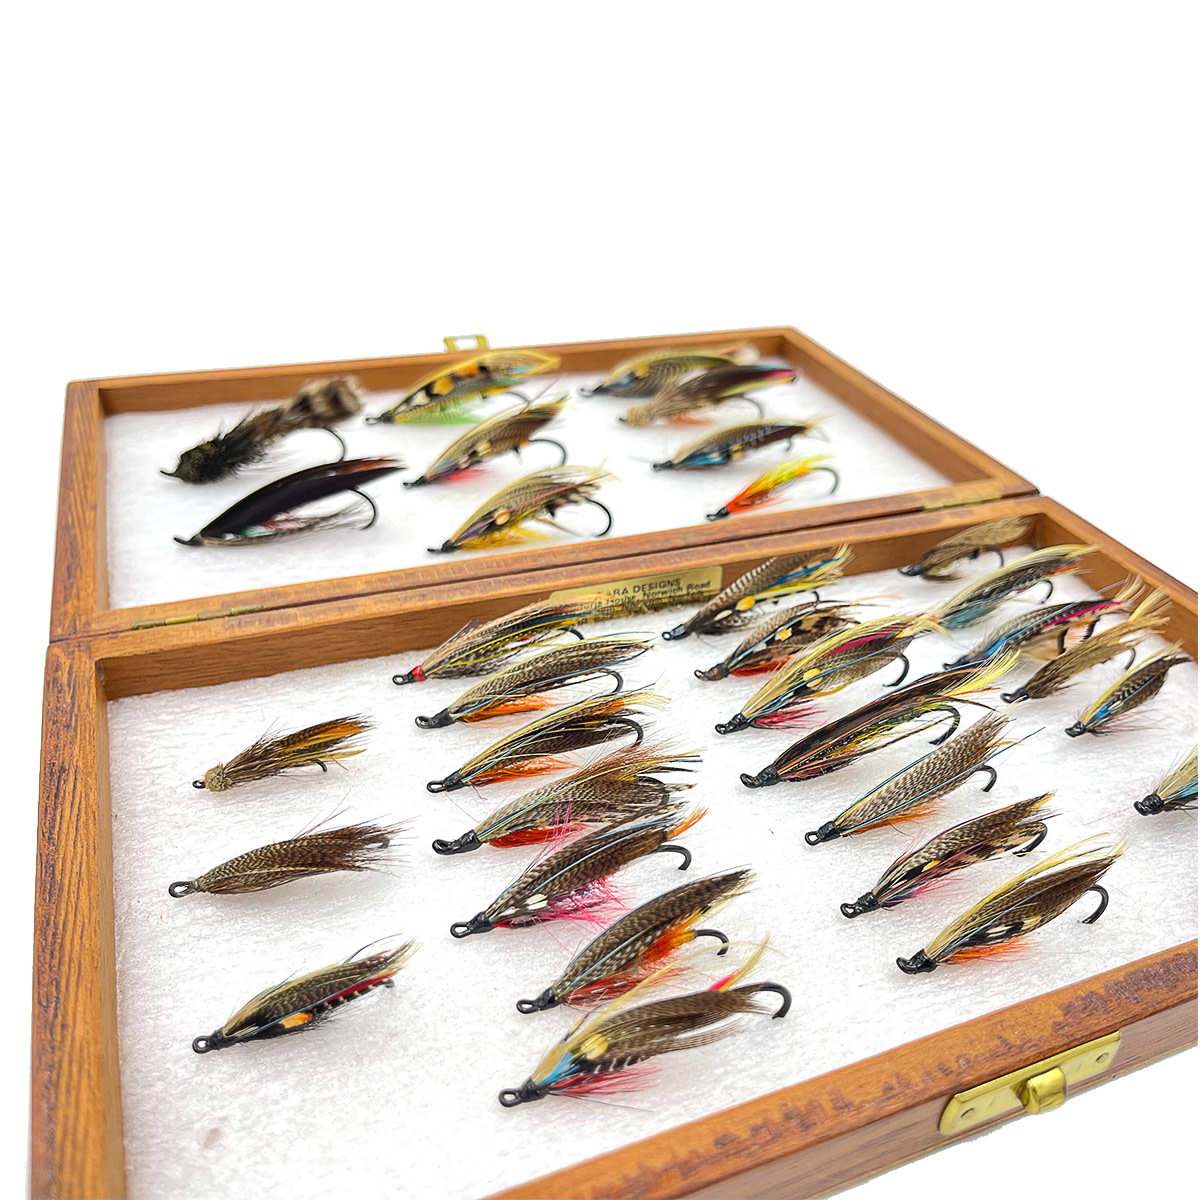 Tara Design Vintage Wooden Fly Box with 33 Atlantic Salmon Flies